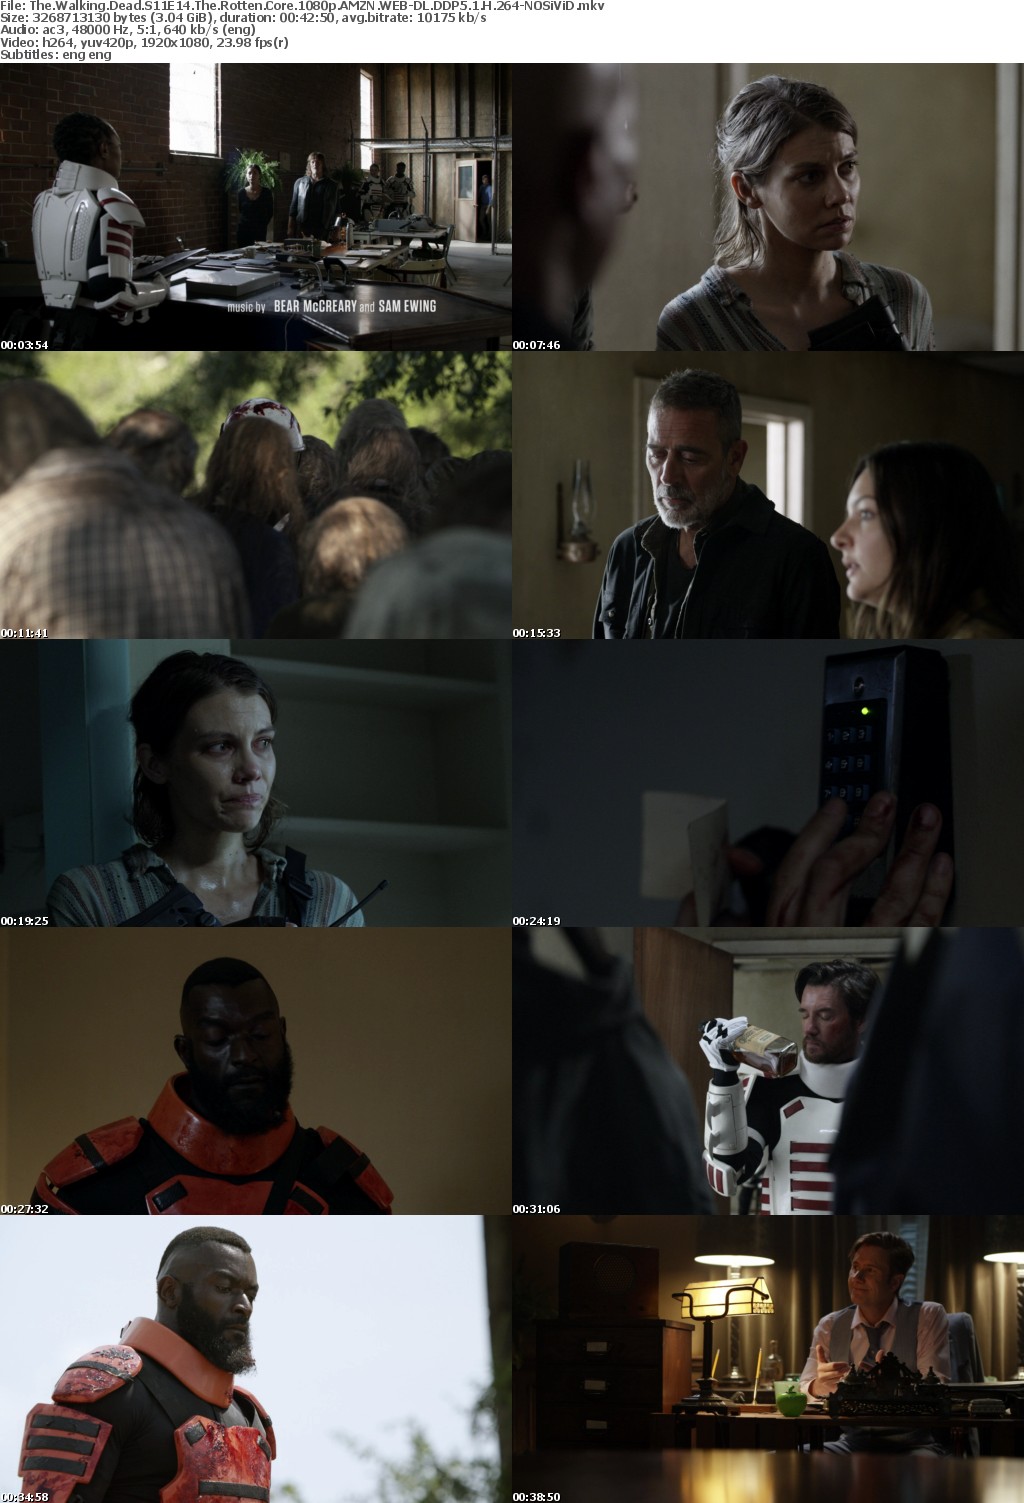 The Walking Dead S11E14 The Rotten Core 1080p AMZN WEBRip DDP5 1 x264-NOSiViD